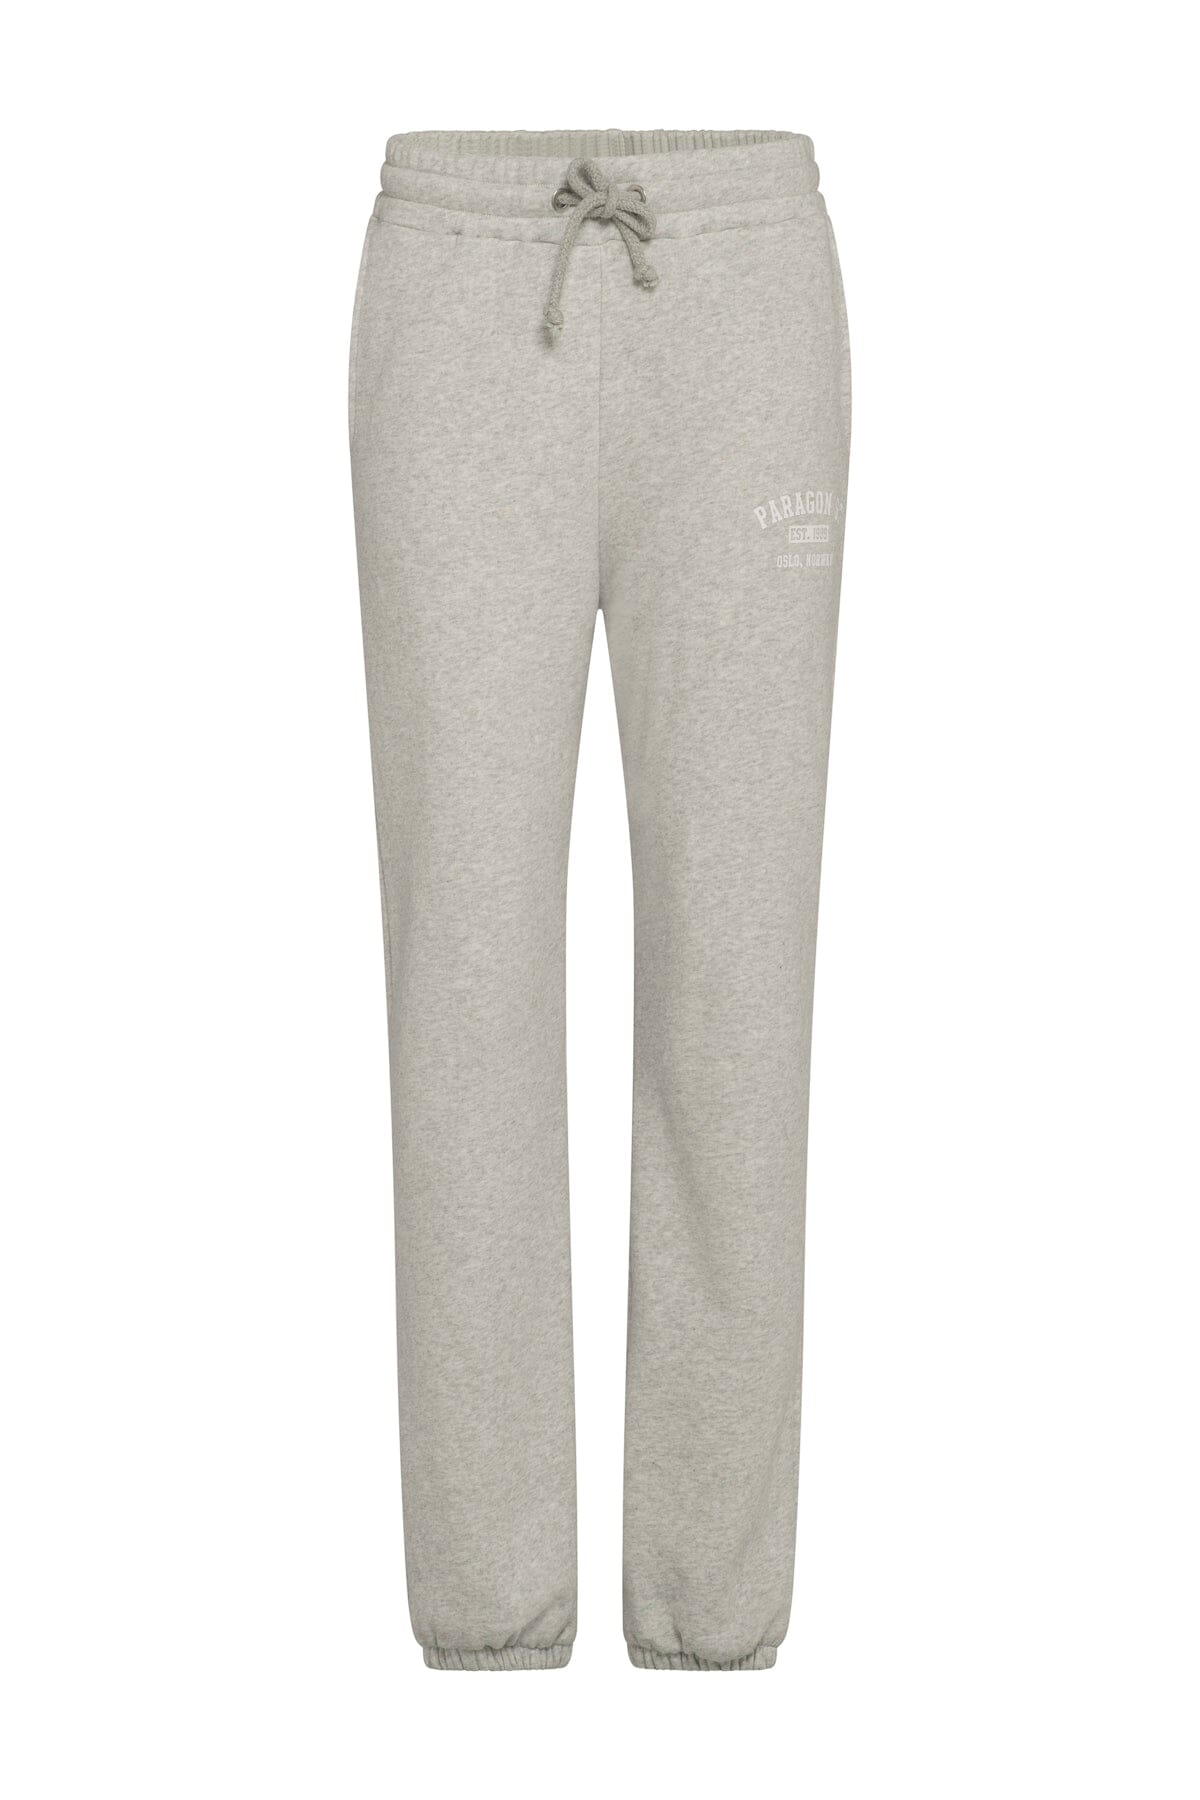 Paragon Aimee Pant Grey Melange Bukse